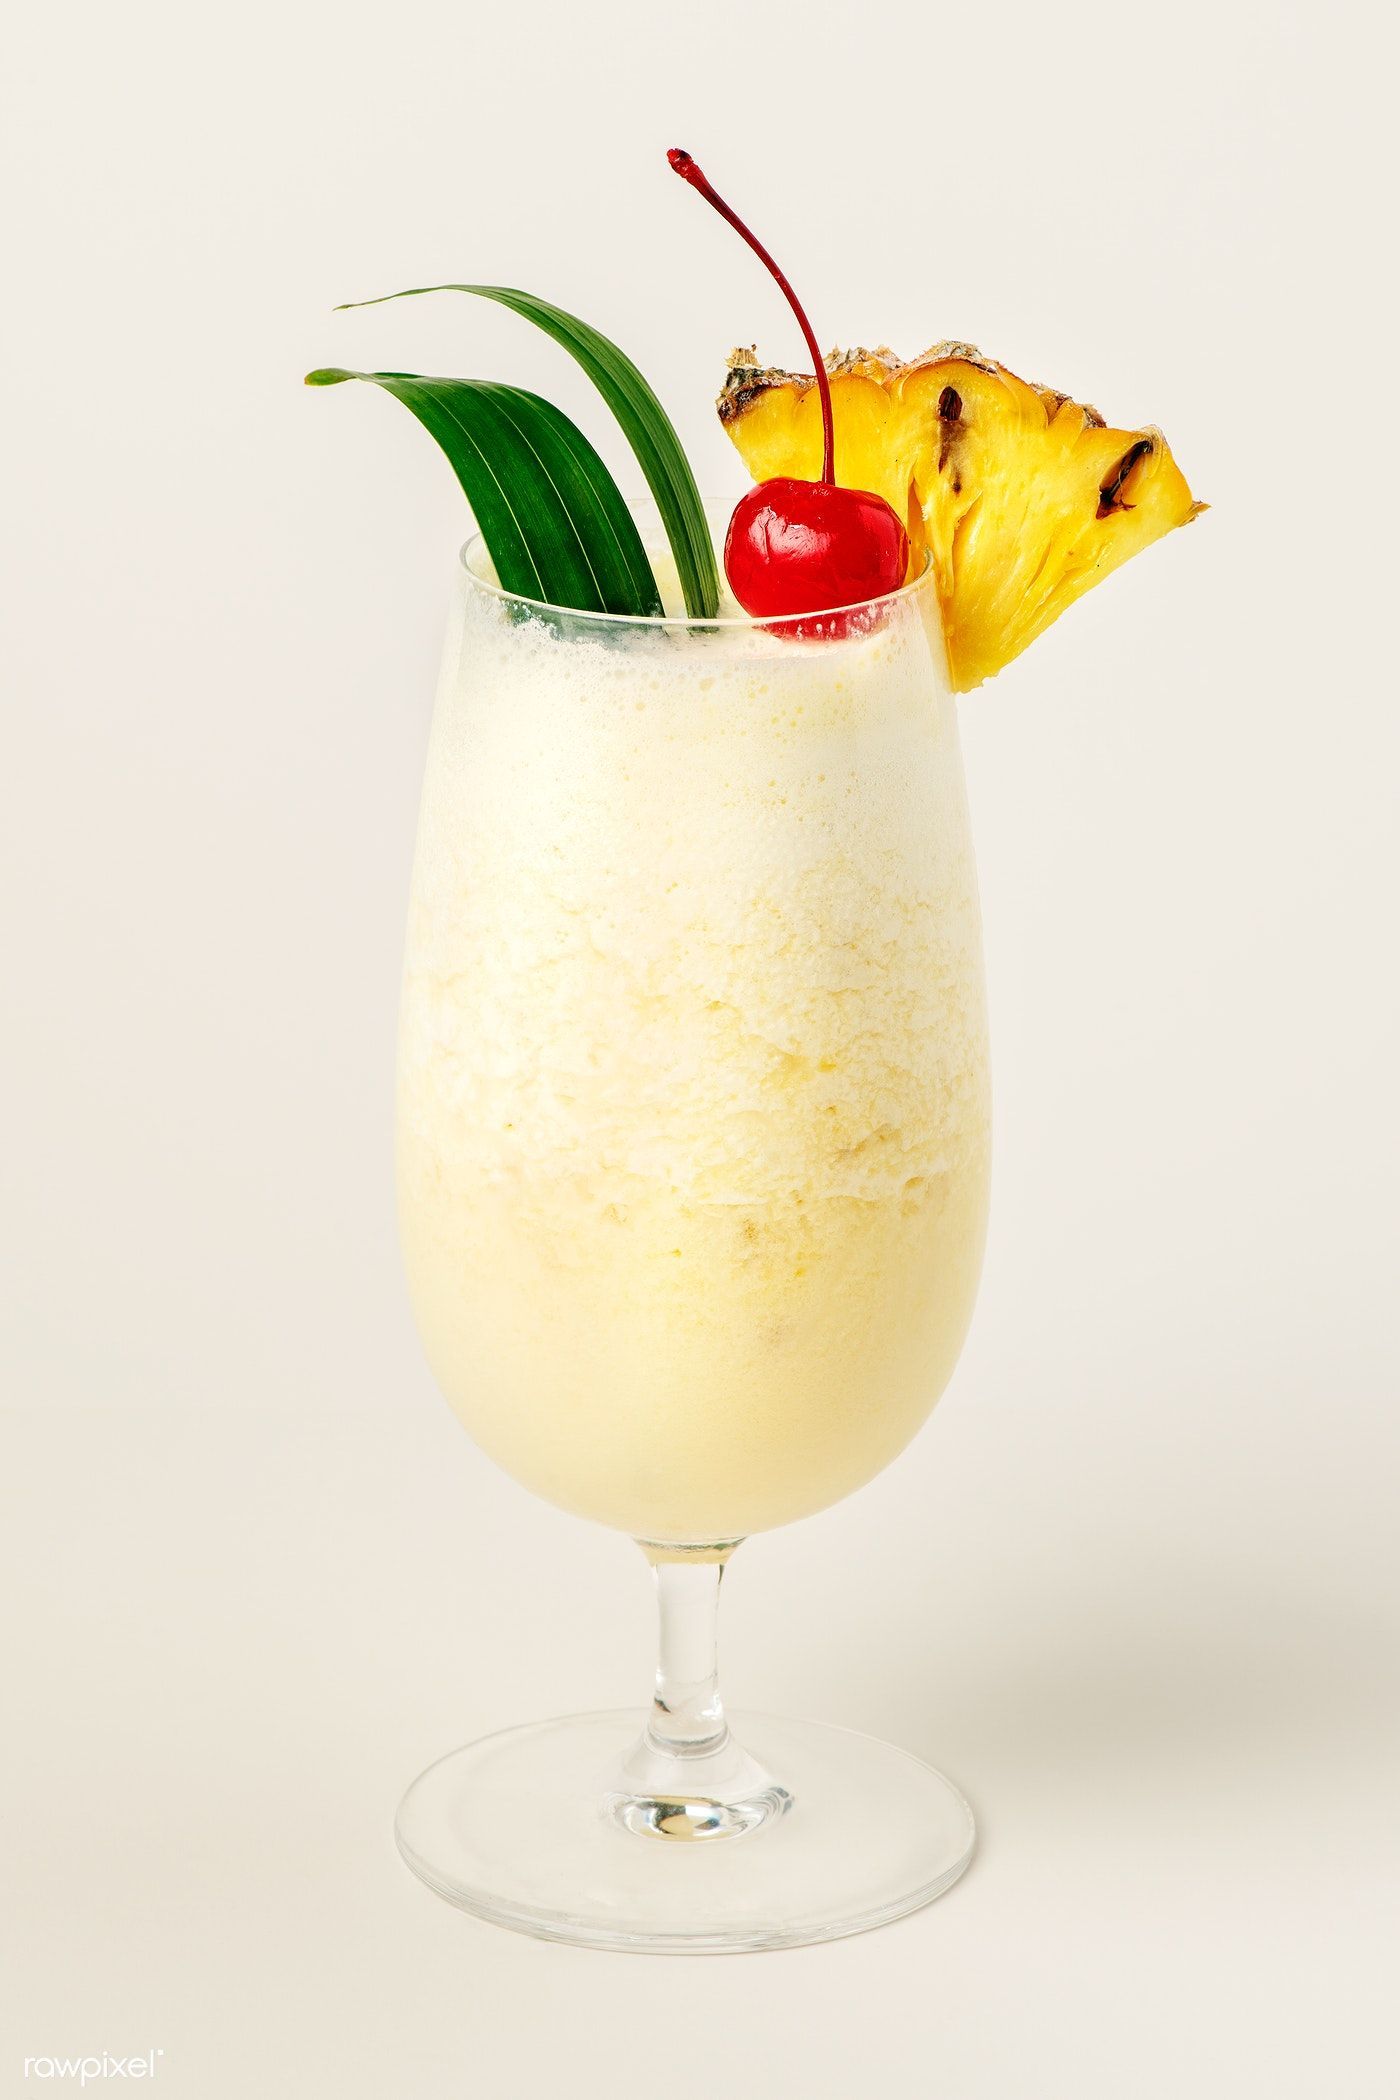 Download premium image of Pina Colada with pineapple and cherry on top. Pina colada, Colada drinks, Pina colada drinks